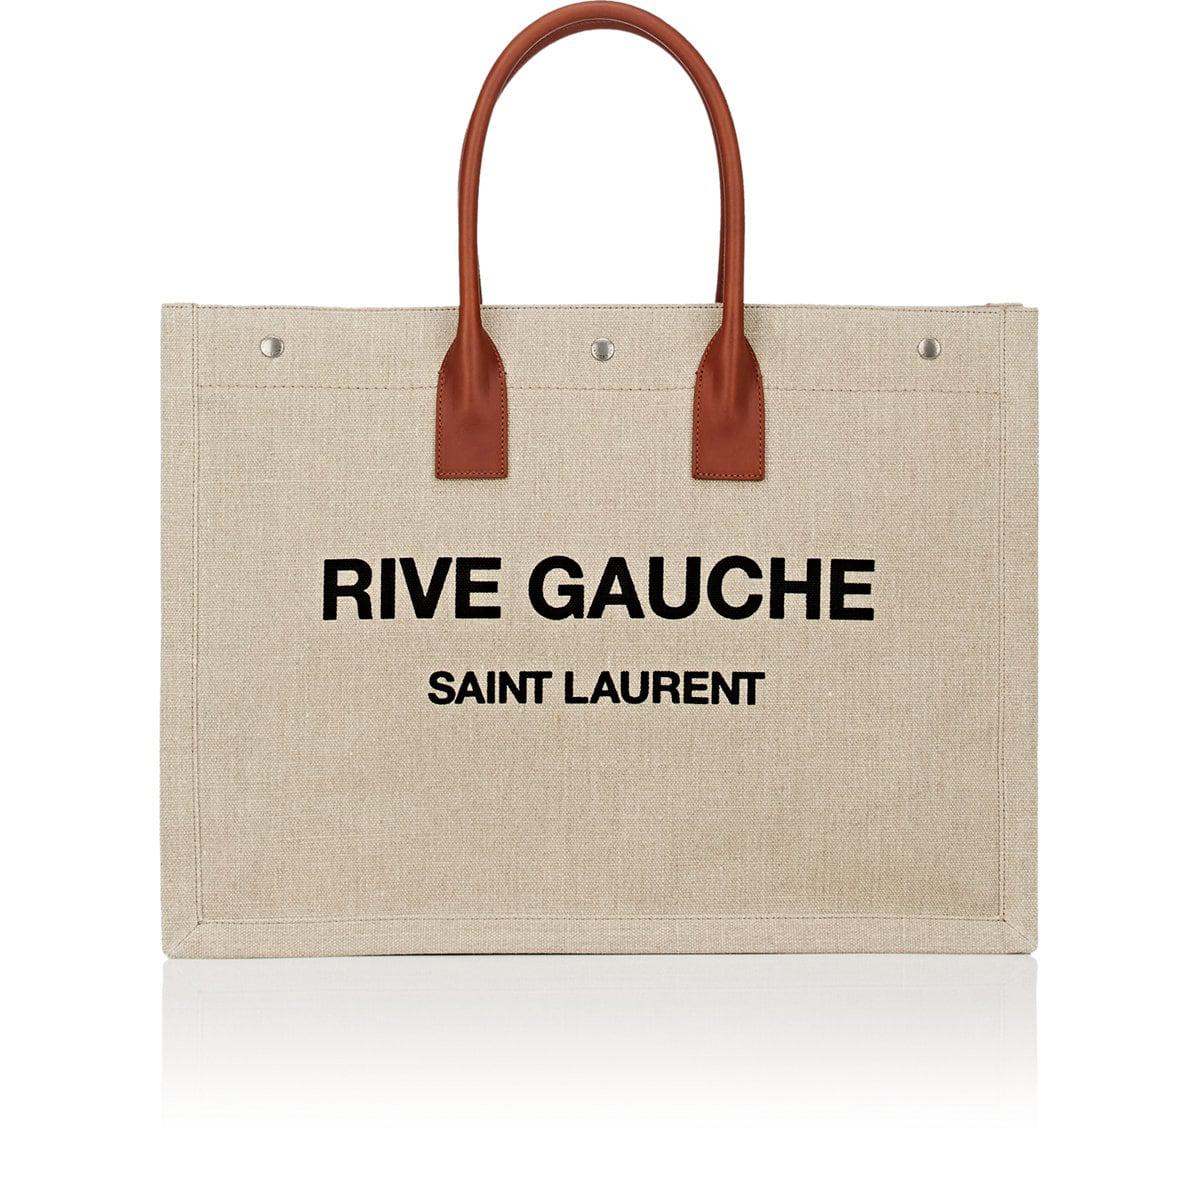 Saint Laurent Rive Gauche Large Canvas Tote Bag in Brown - Lyst